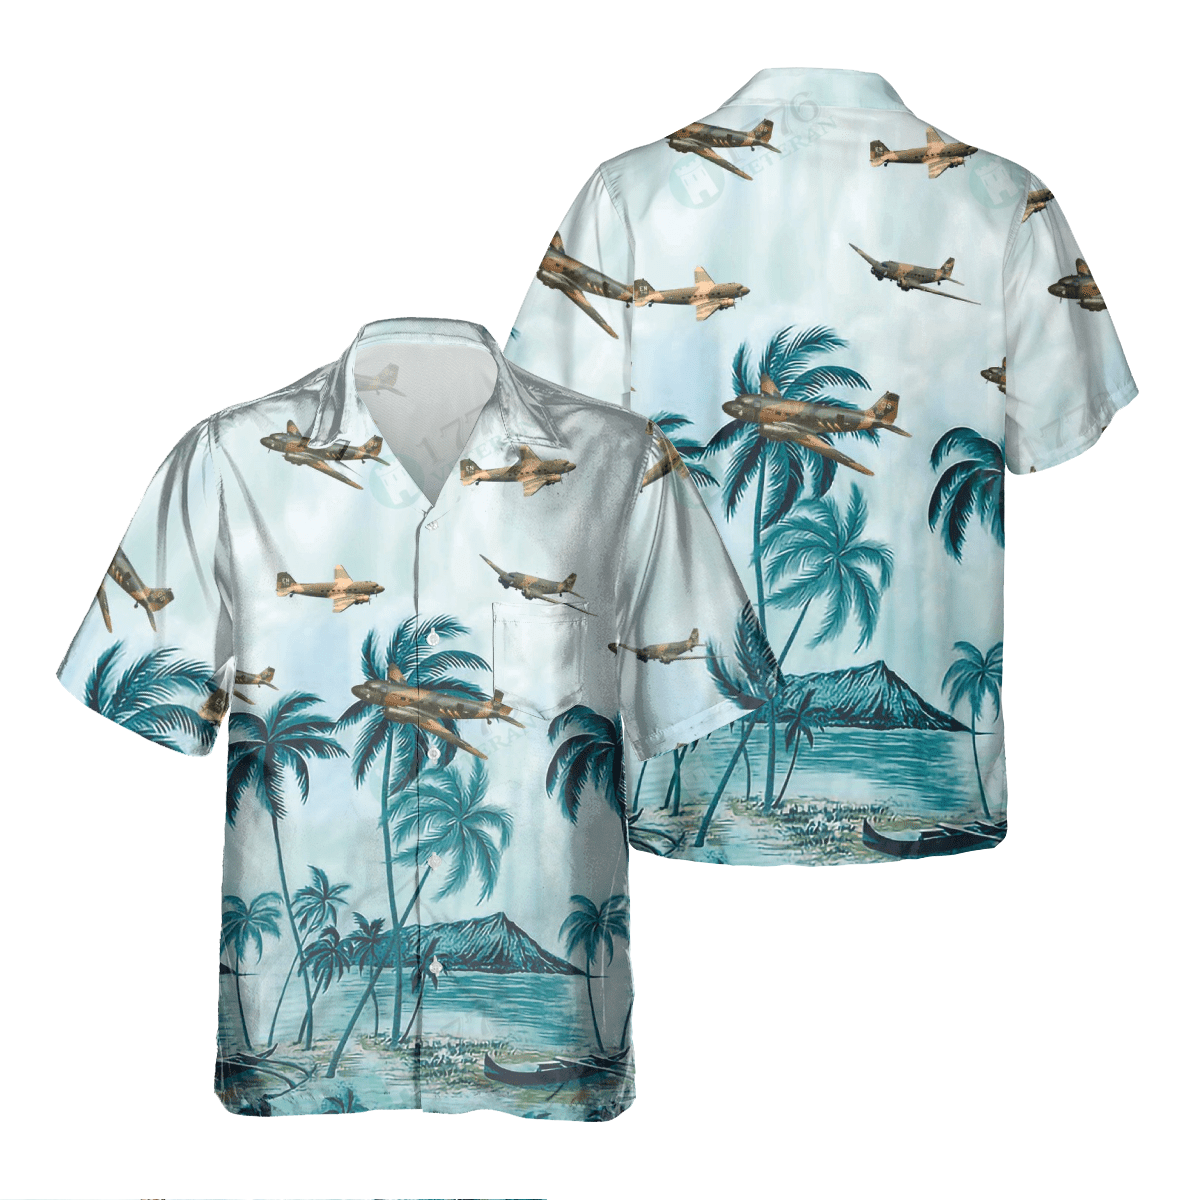 Ac-47 Spooky Pocket Hawaiian Shirt/ Hawaiian Shirt for Men Dad Veteran/ Patriot Day